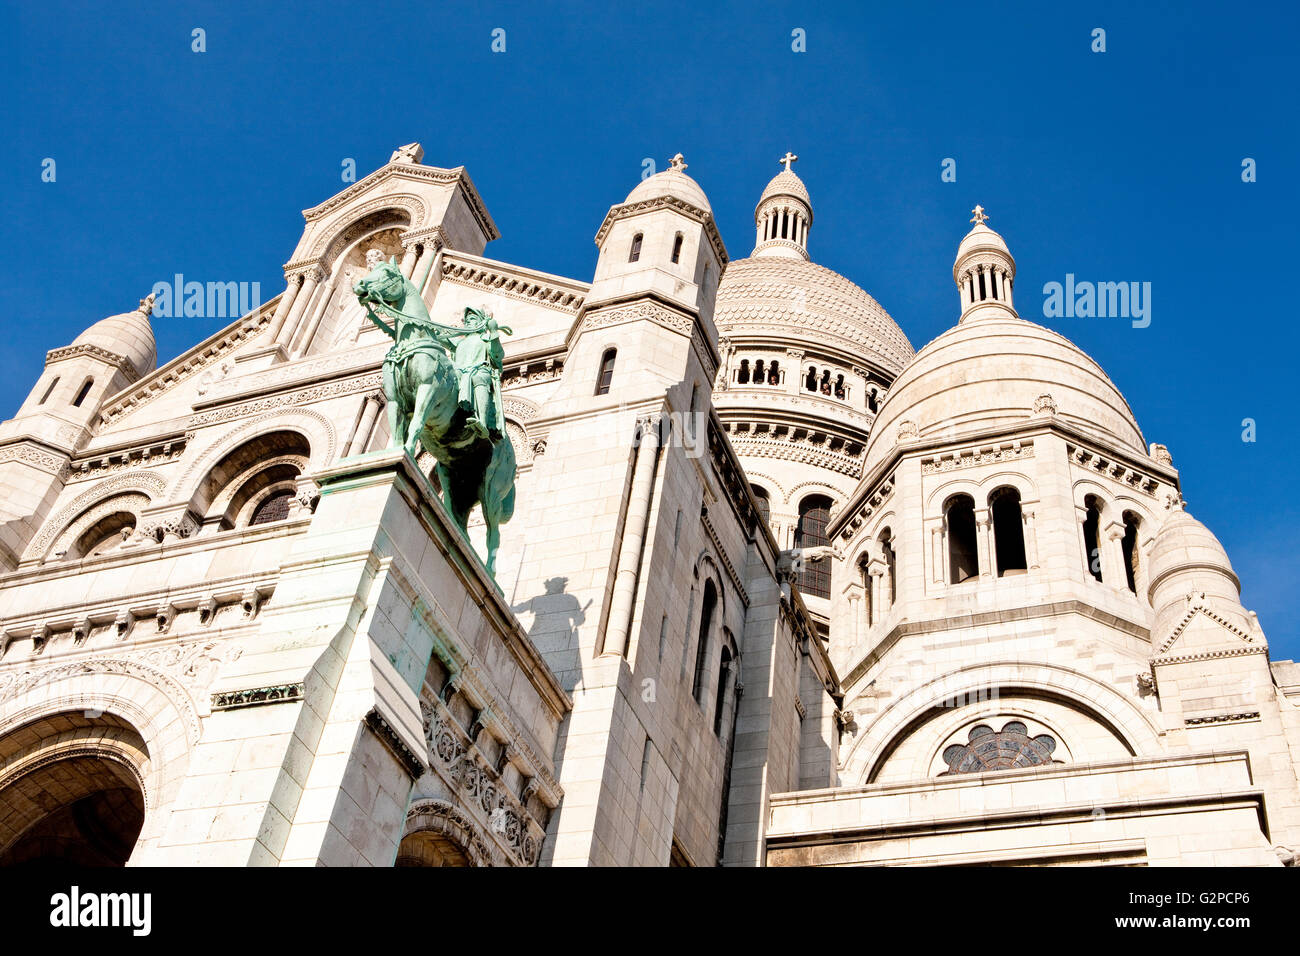 Basilica of the Sacred Heart of Paris, commonly known as Sacré-Cœur Basilica and often simply Sacré-Cœur, France Stock Photo